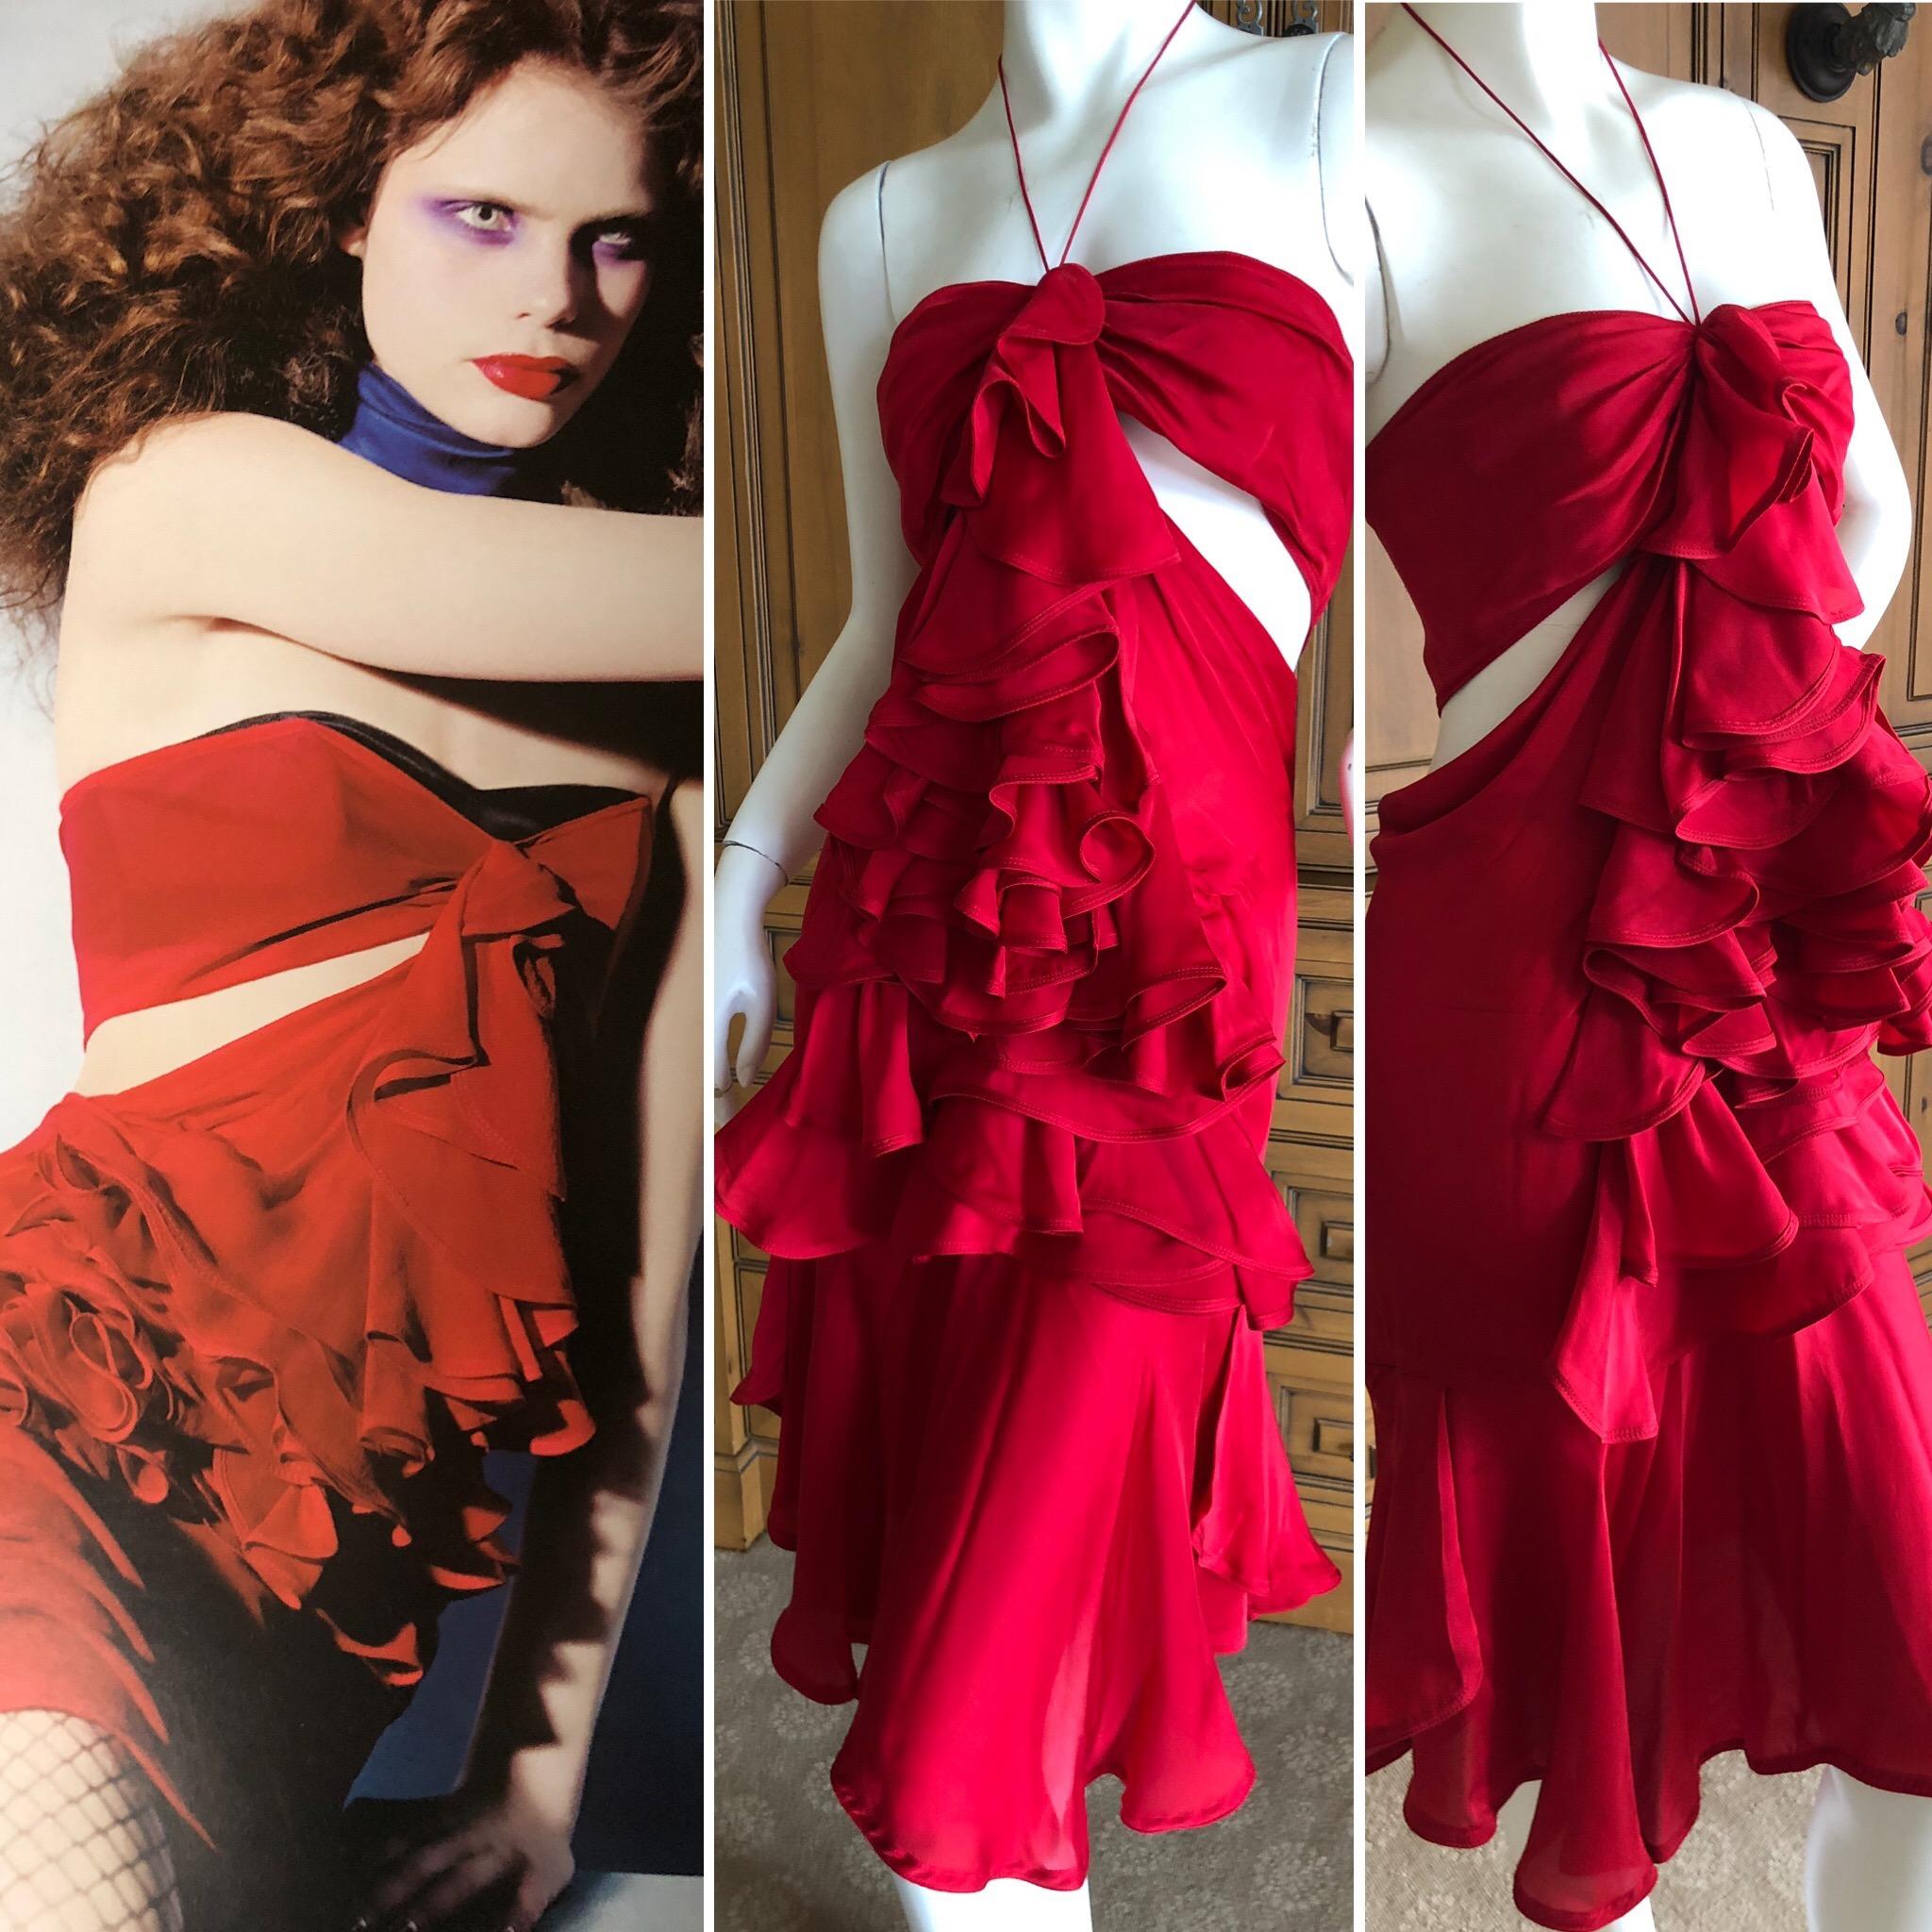 Women's Yves Saint Laurent by Tom Ford 2003 Ruffled Red Silk Dress  For Sale